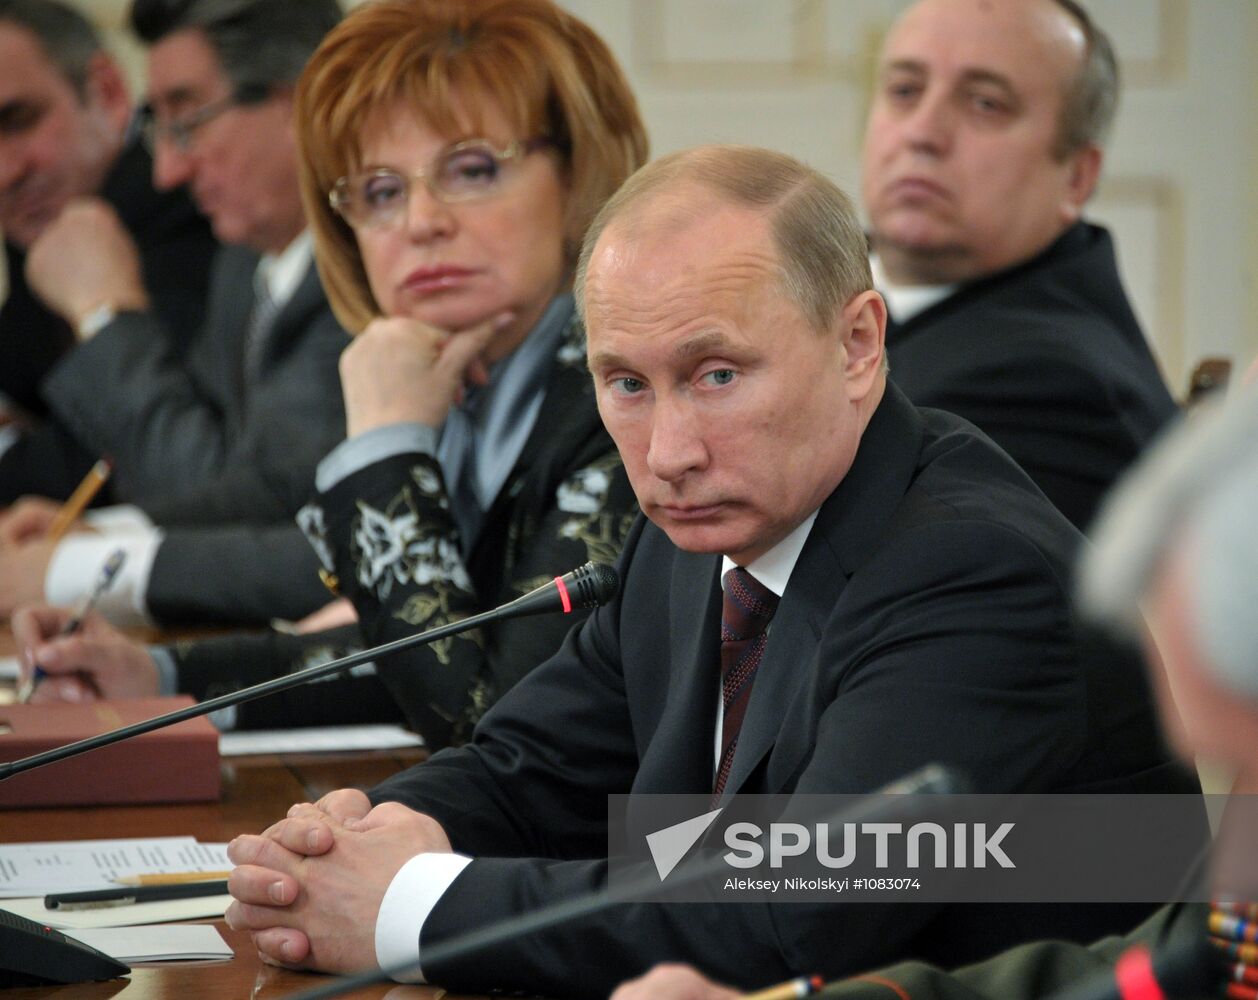 Vladimir Putin meets with members of RPF Coordination Council